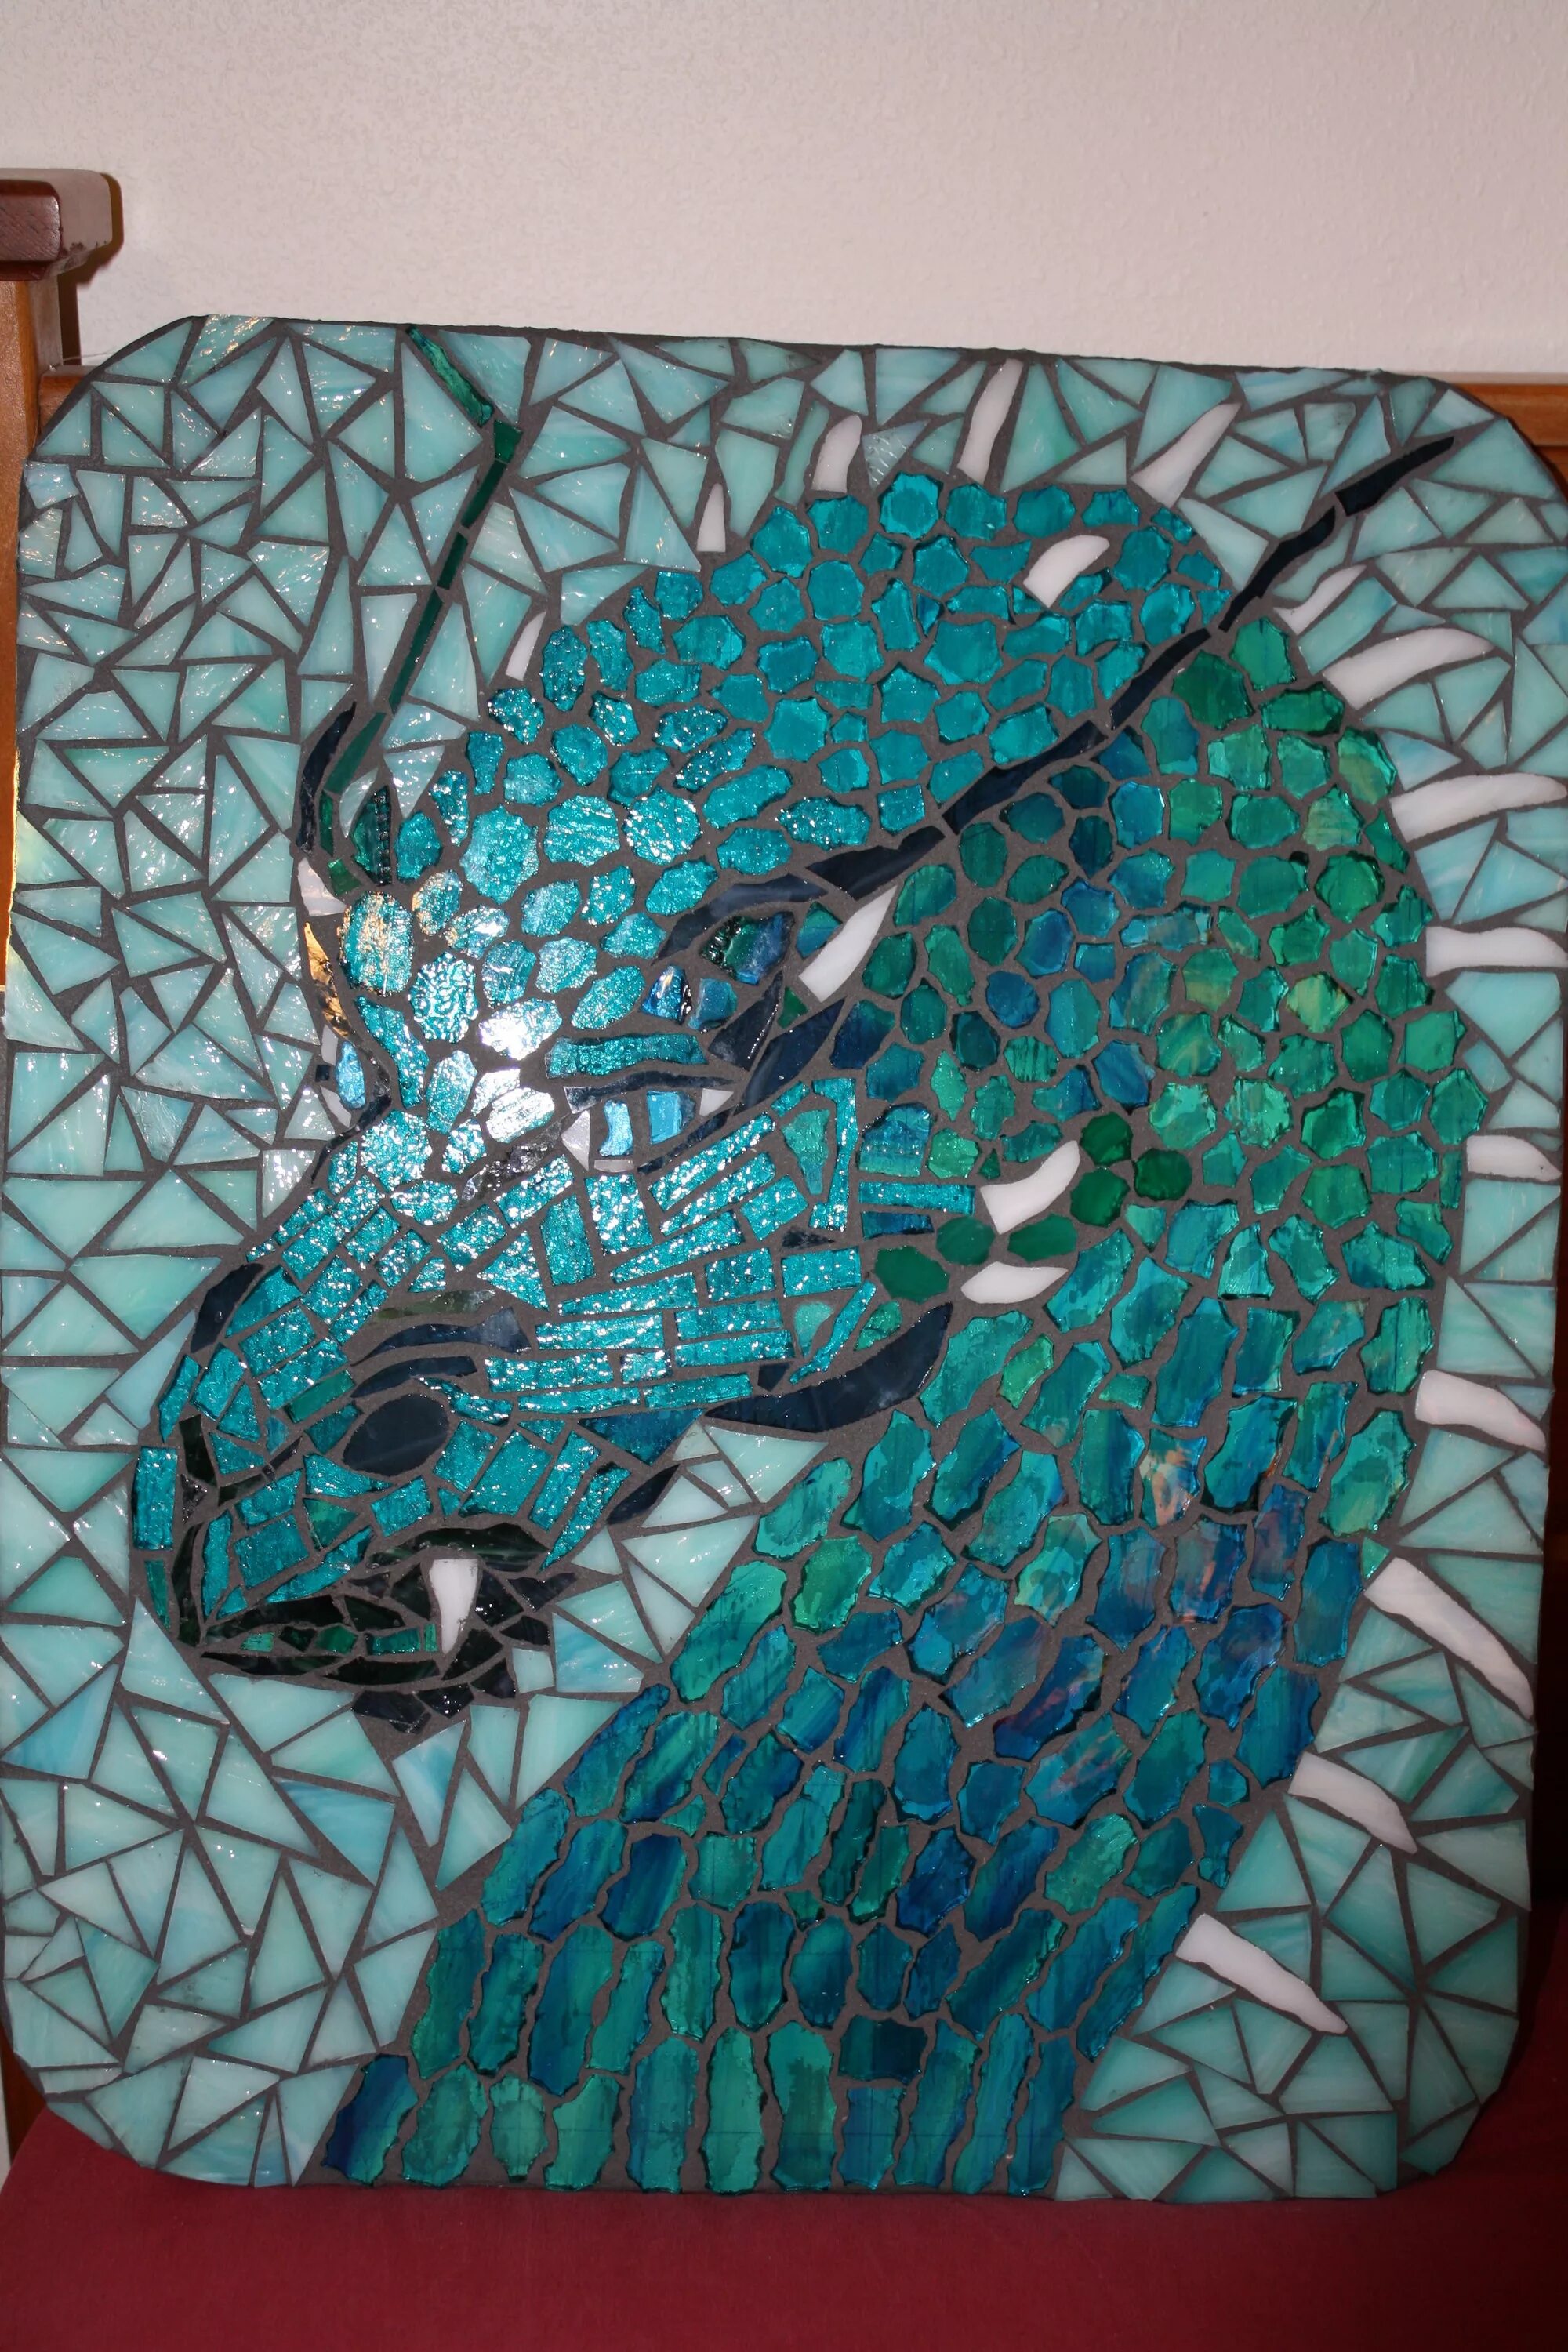 Mosaic Dragon витраж. Дракон из мозаики. Витражная мозайка дракон. Змея мозаика.